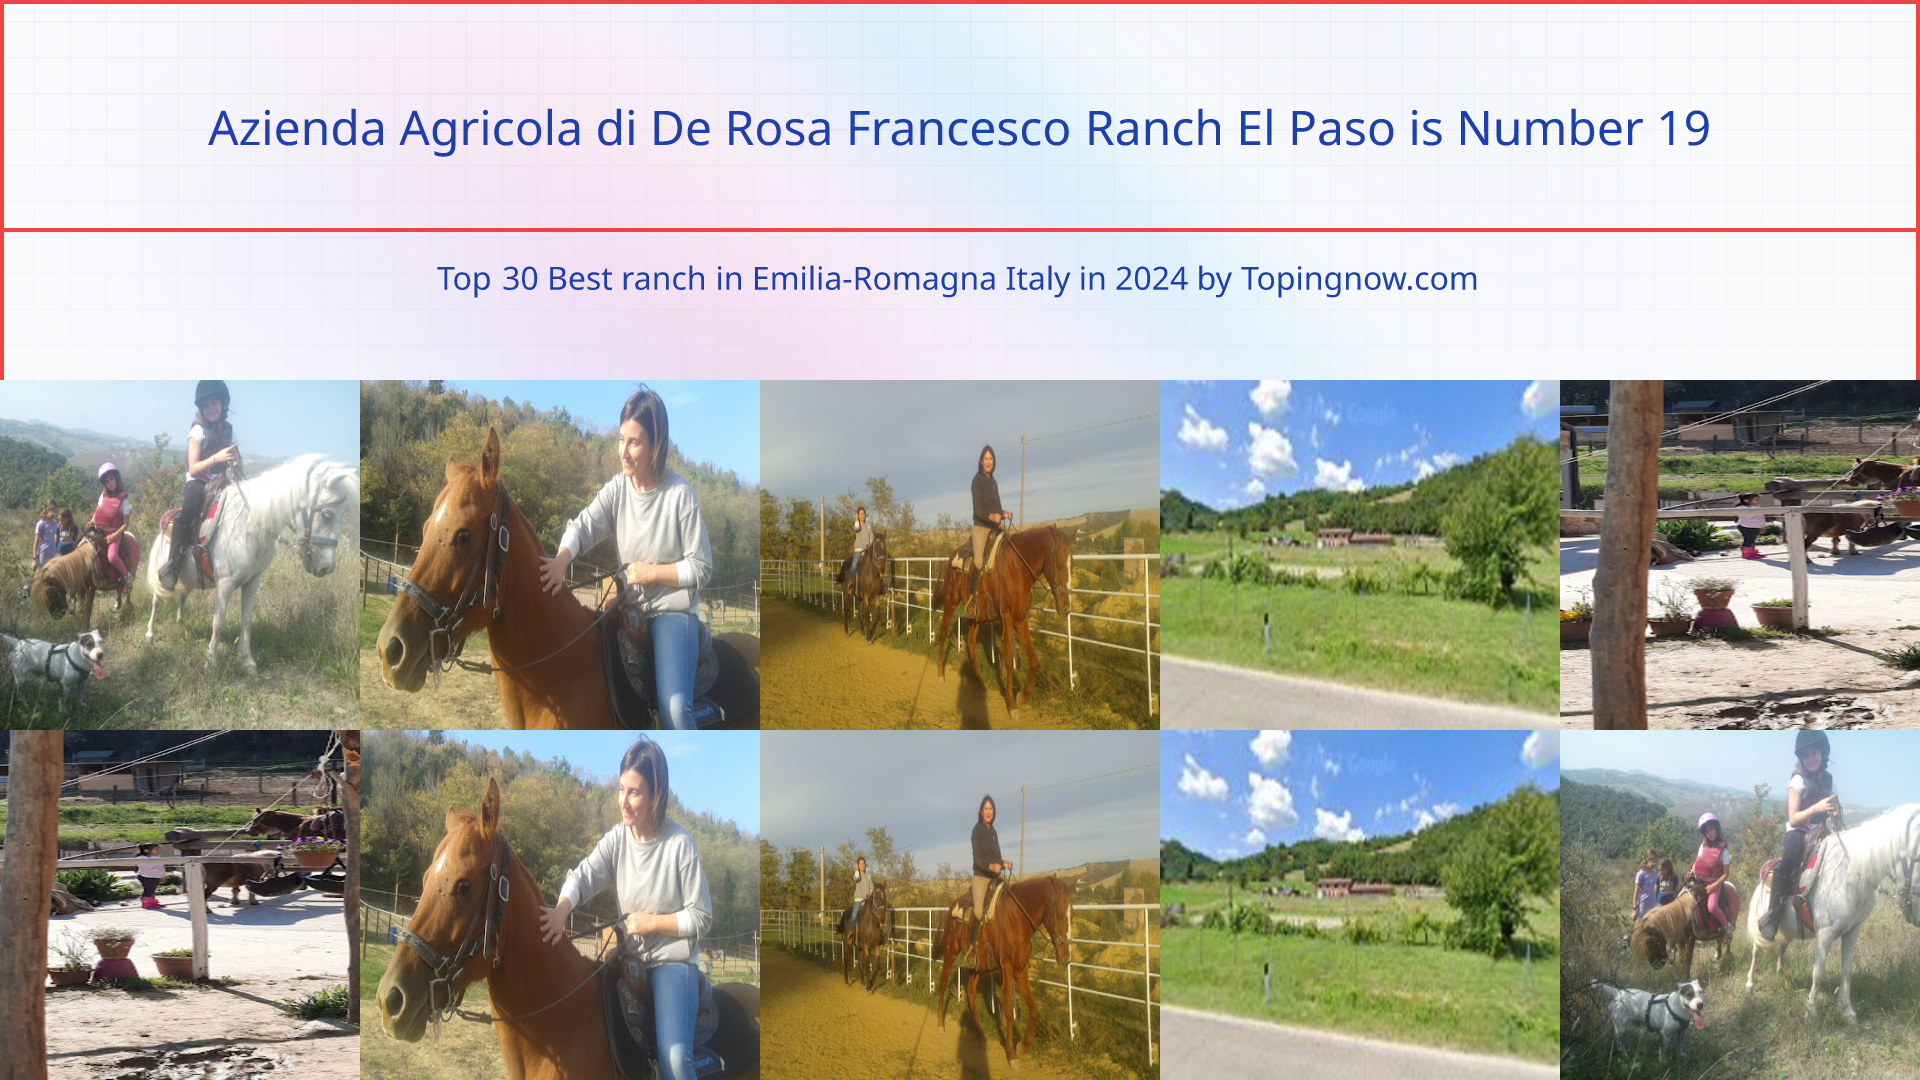 Azienda Agricola di De Rosa Francesco Ranch El Paso: Top 30 Best ranch in Emilia-Romagna Italy in 2024